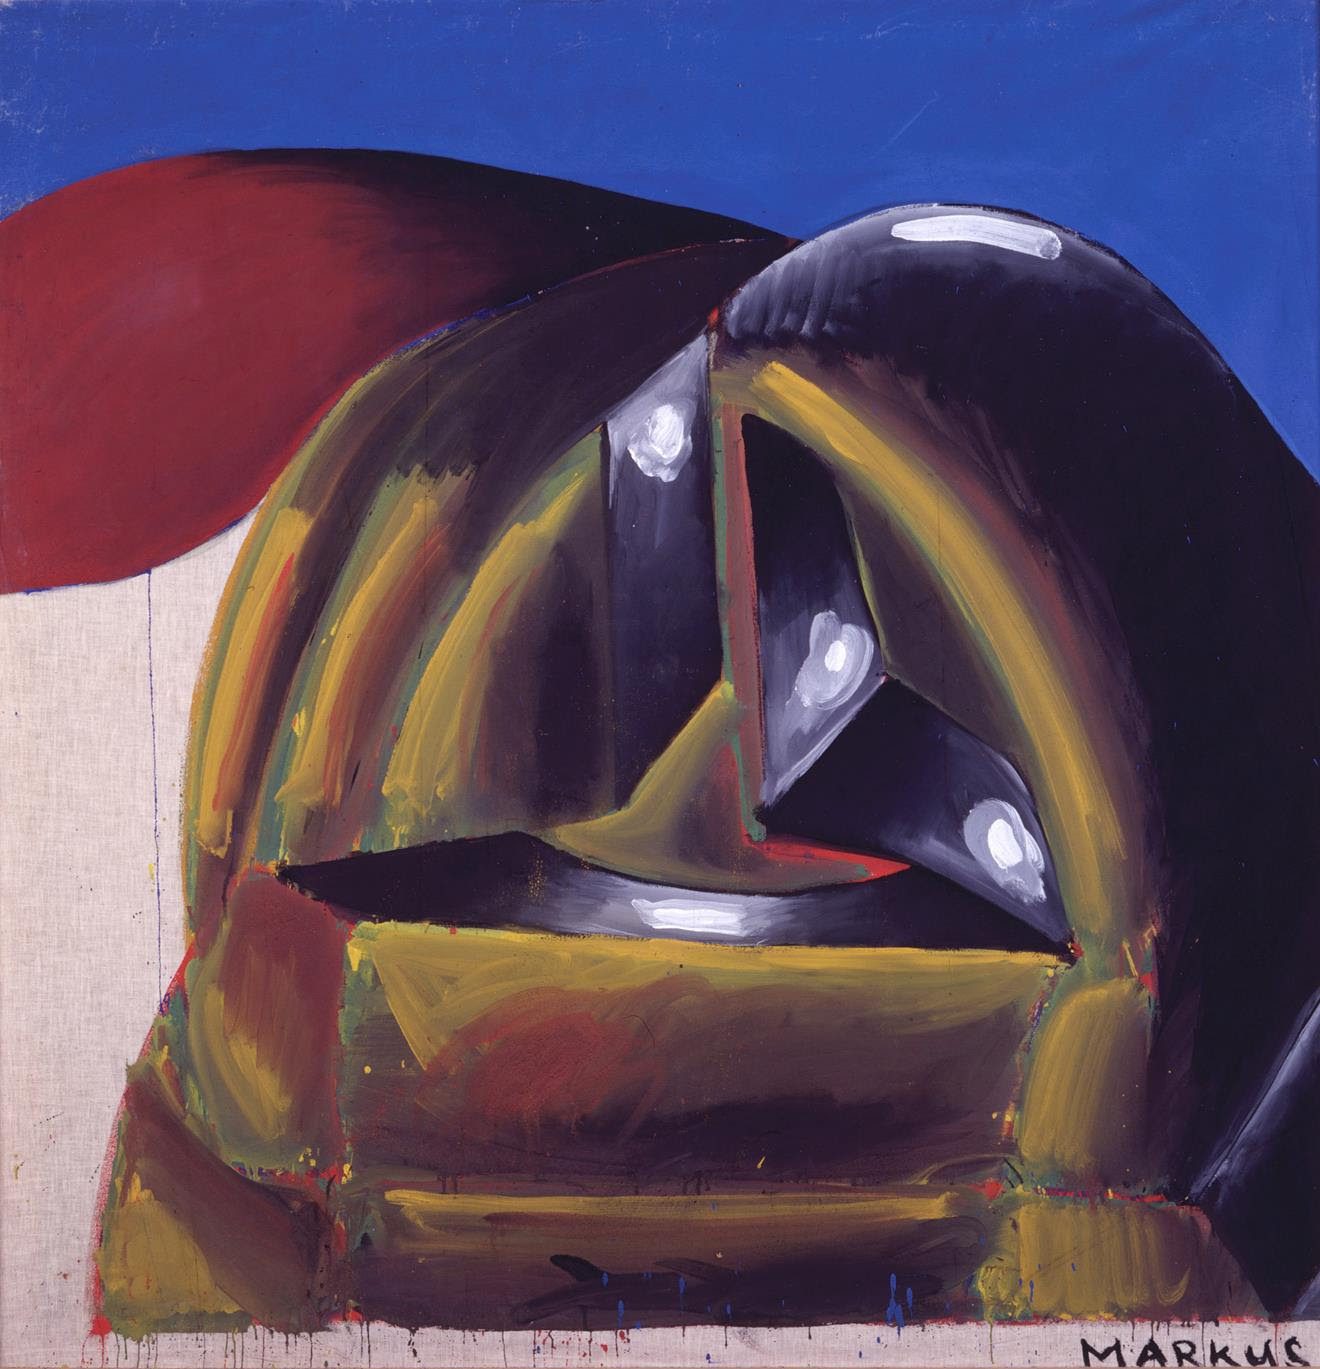 Markus Lüpertz, “Dithyramb with Hill”, 1964 Distemper on linen 59 x 59 inches (150 x 150 cm)